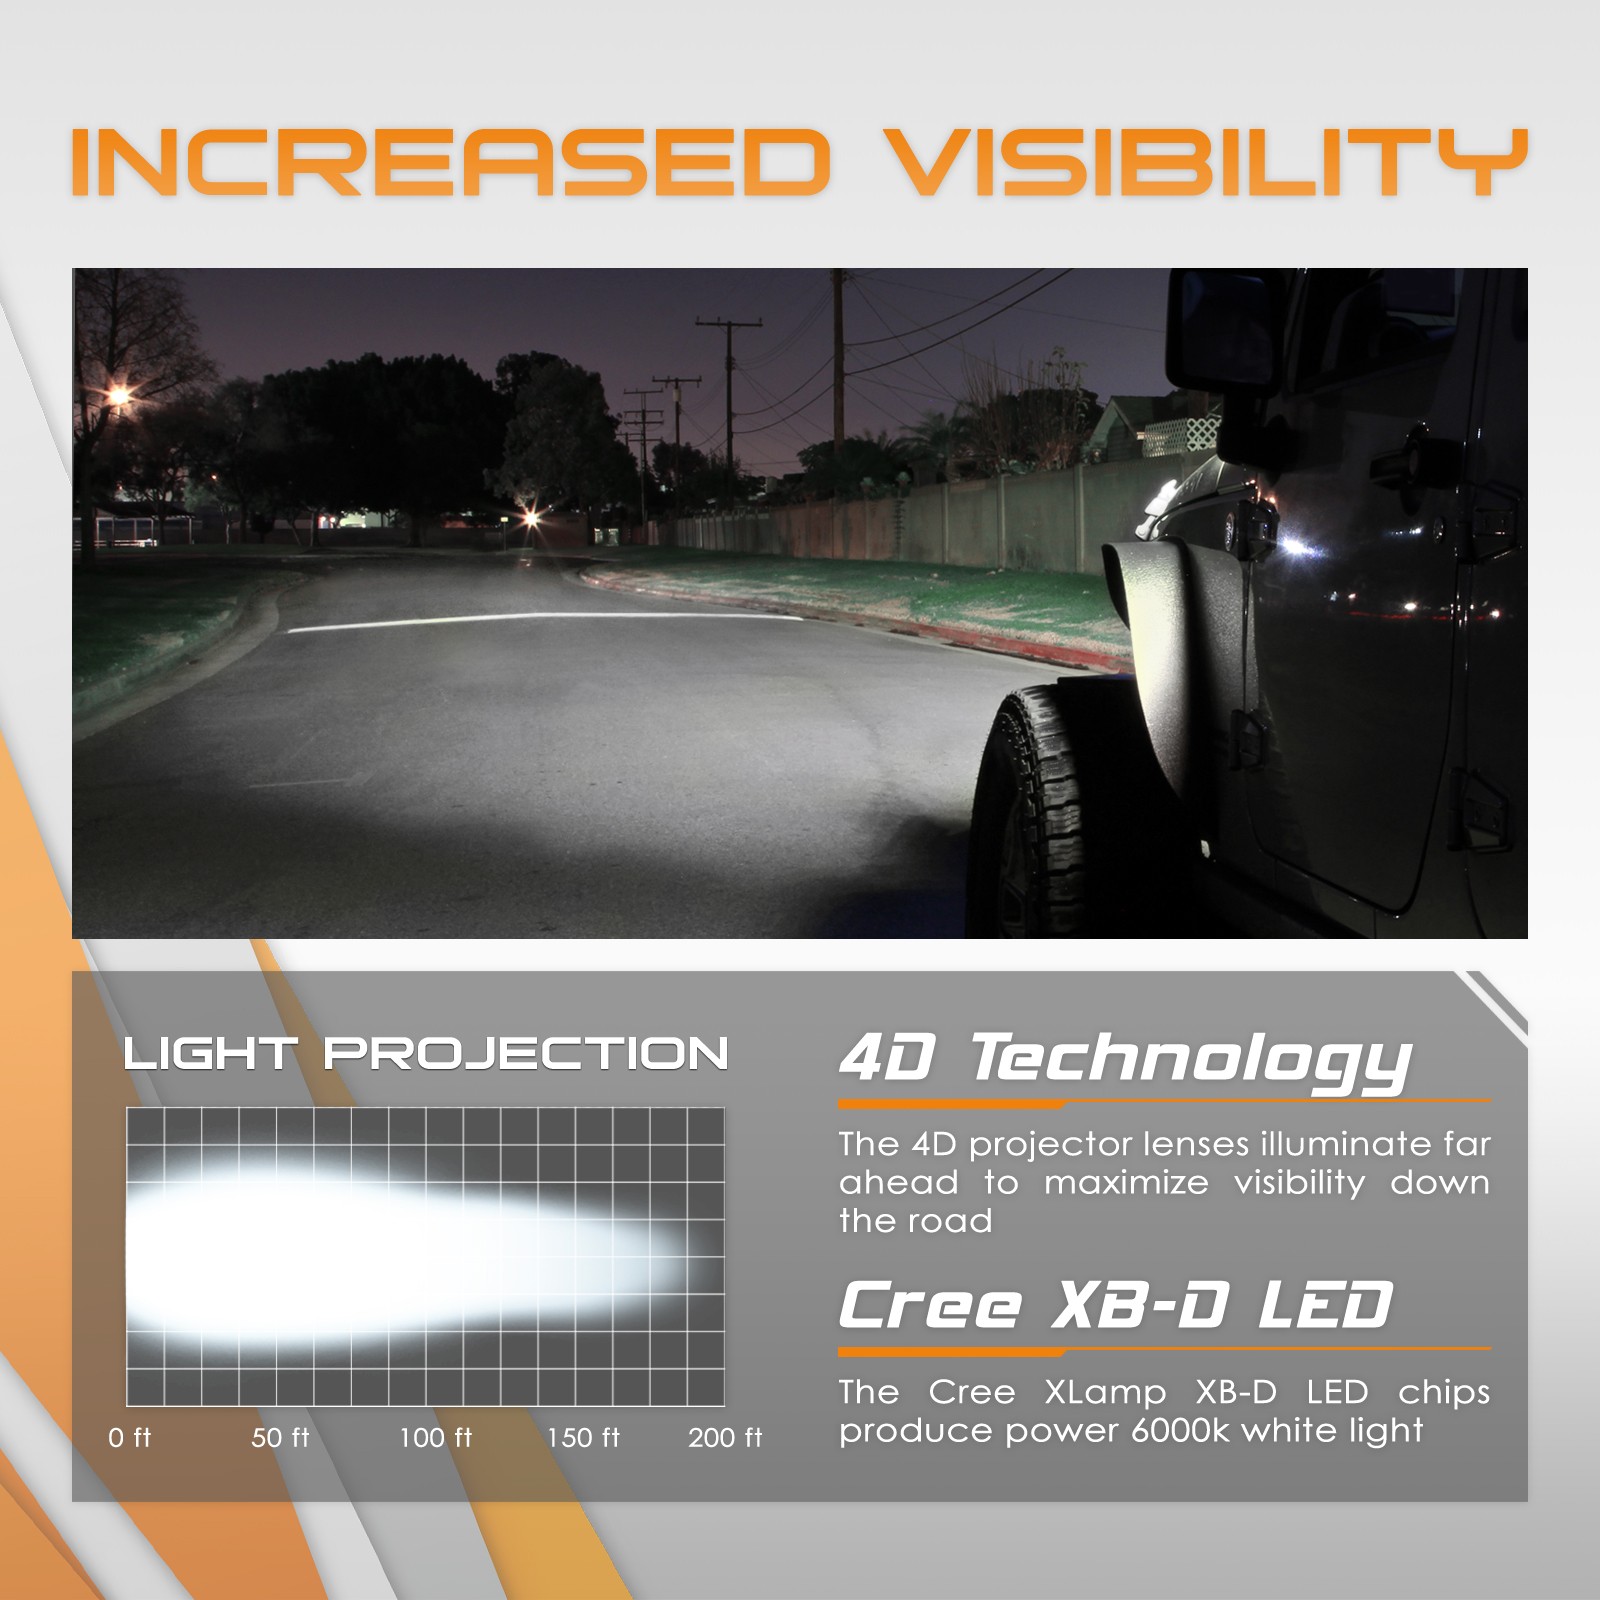 RIGIDON 42Inch 540W Curved LED Amber Light Bar Triple Row Offroad Driving  Fog